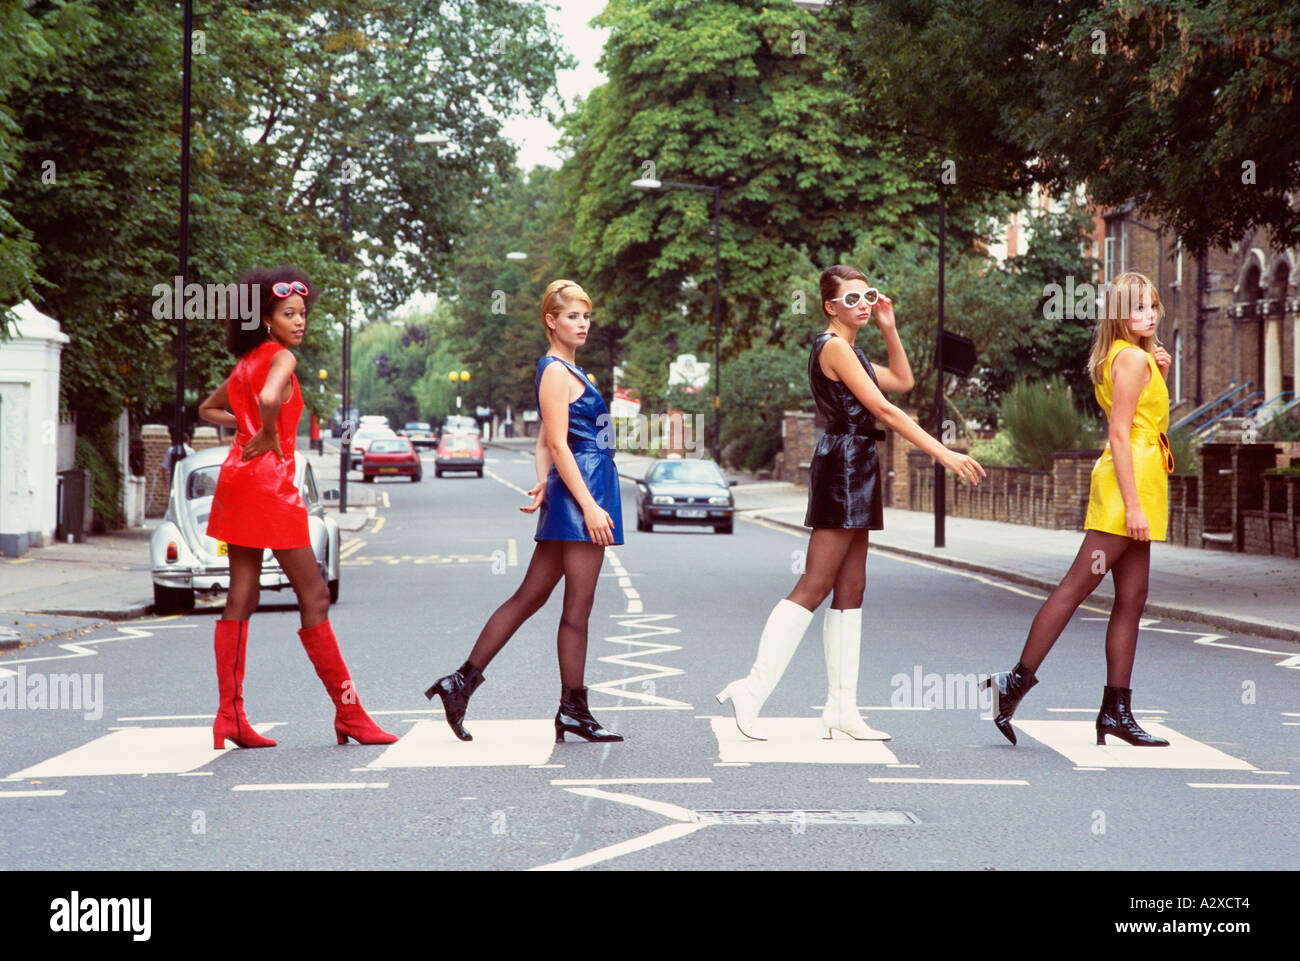 United Kingdom. England. London. Abbey Road. Sixties fashion models on zebra crossing. Stock Photo